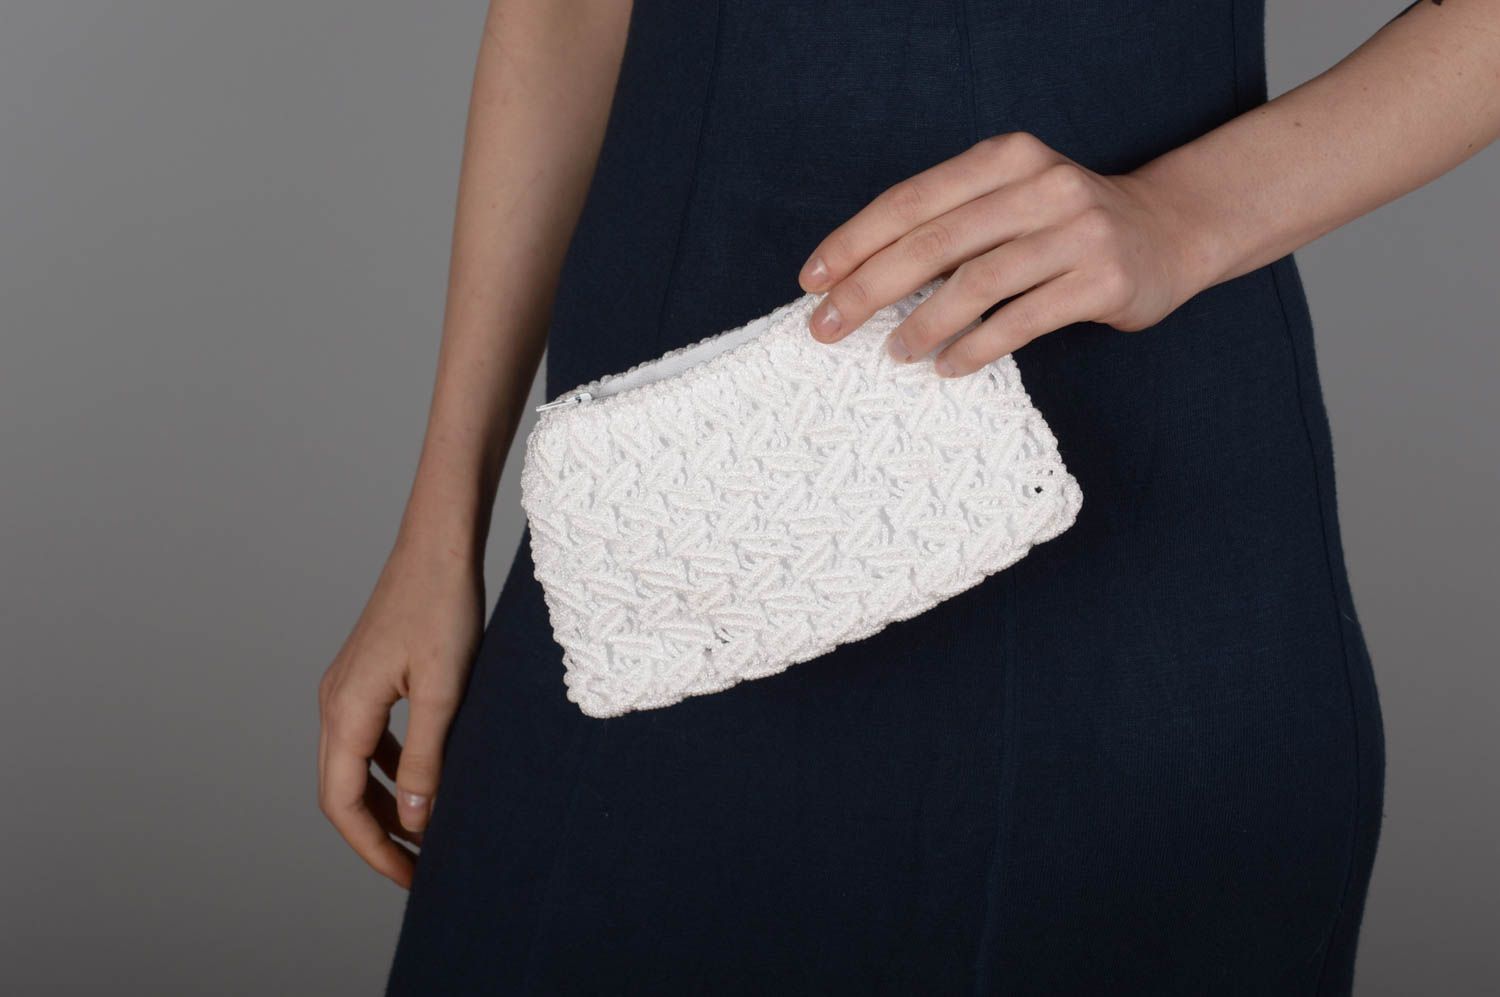 Makeup case homemade macrame bag designer accessories gift ideas for women photo 5